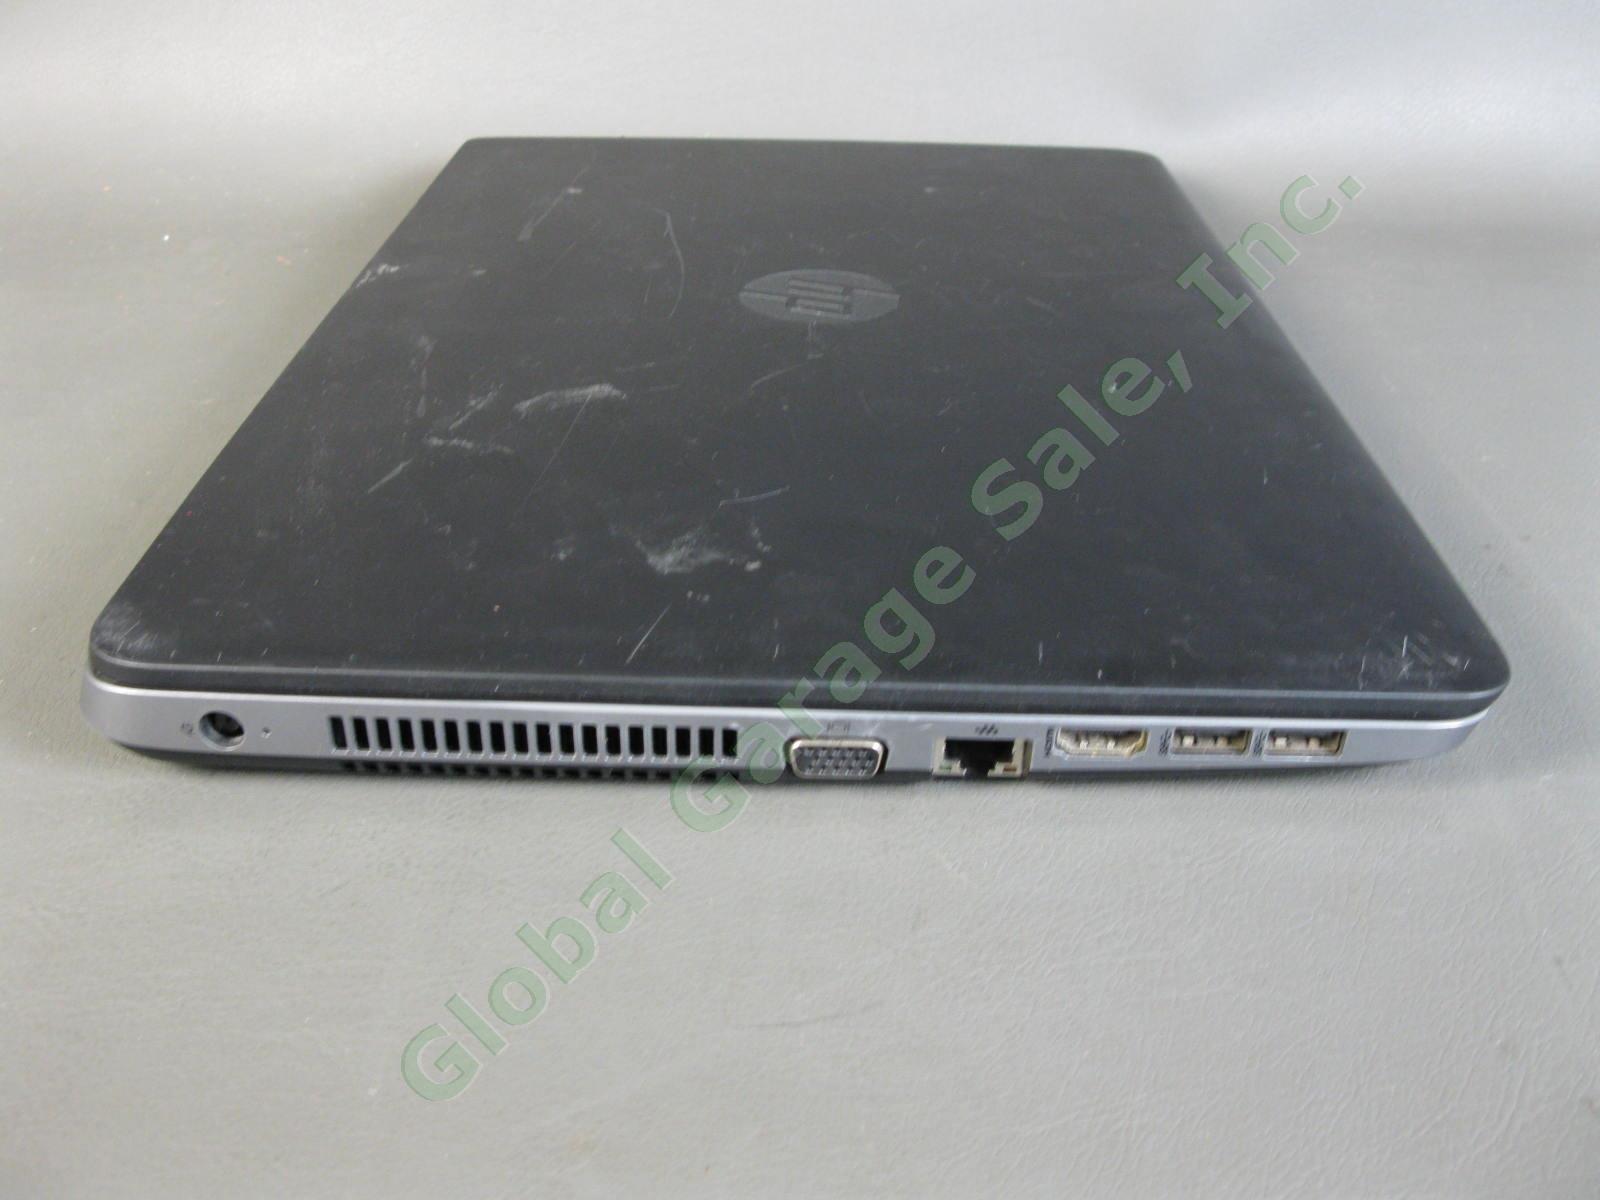 HP ProBook 450 G1 Laptop Computer i5-4200M 4GB 500GB Windows 10 WIFI DVD Webcam 3